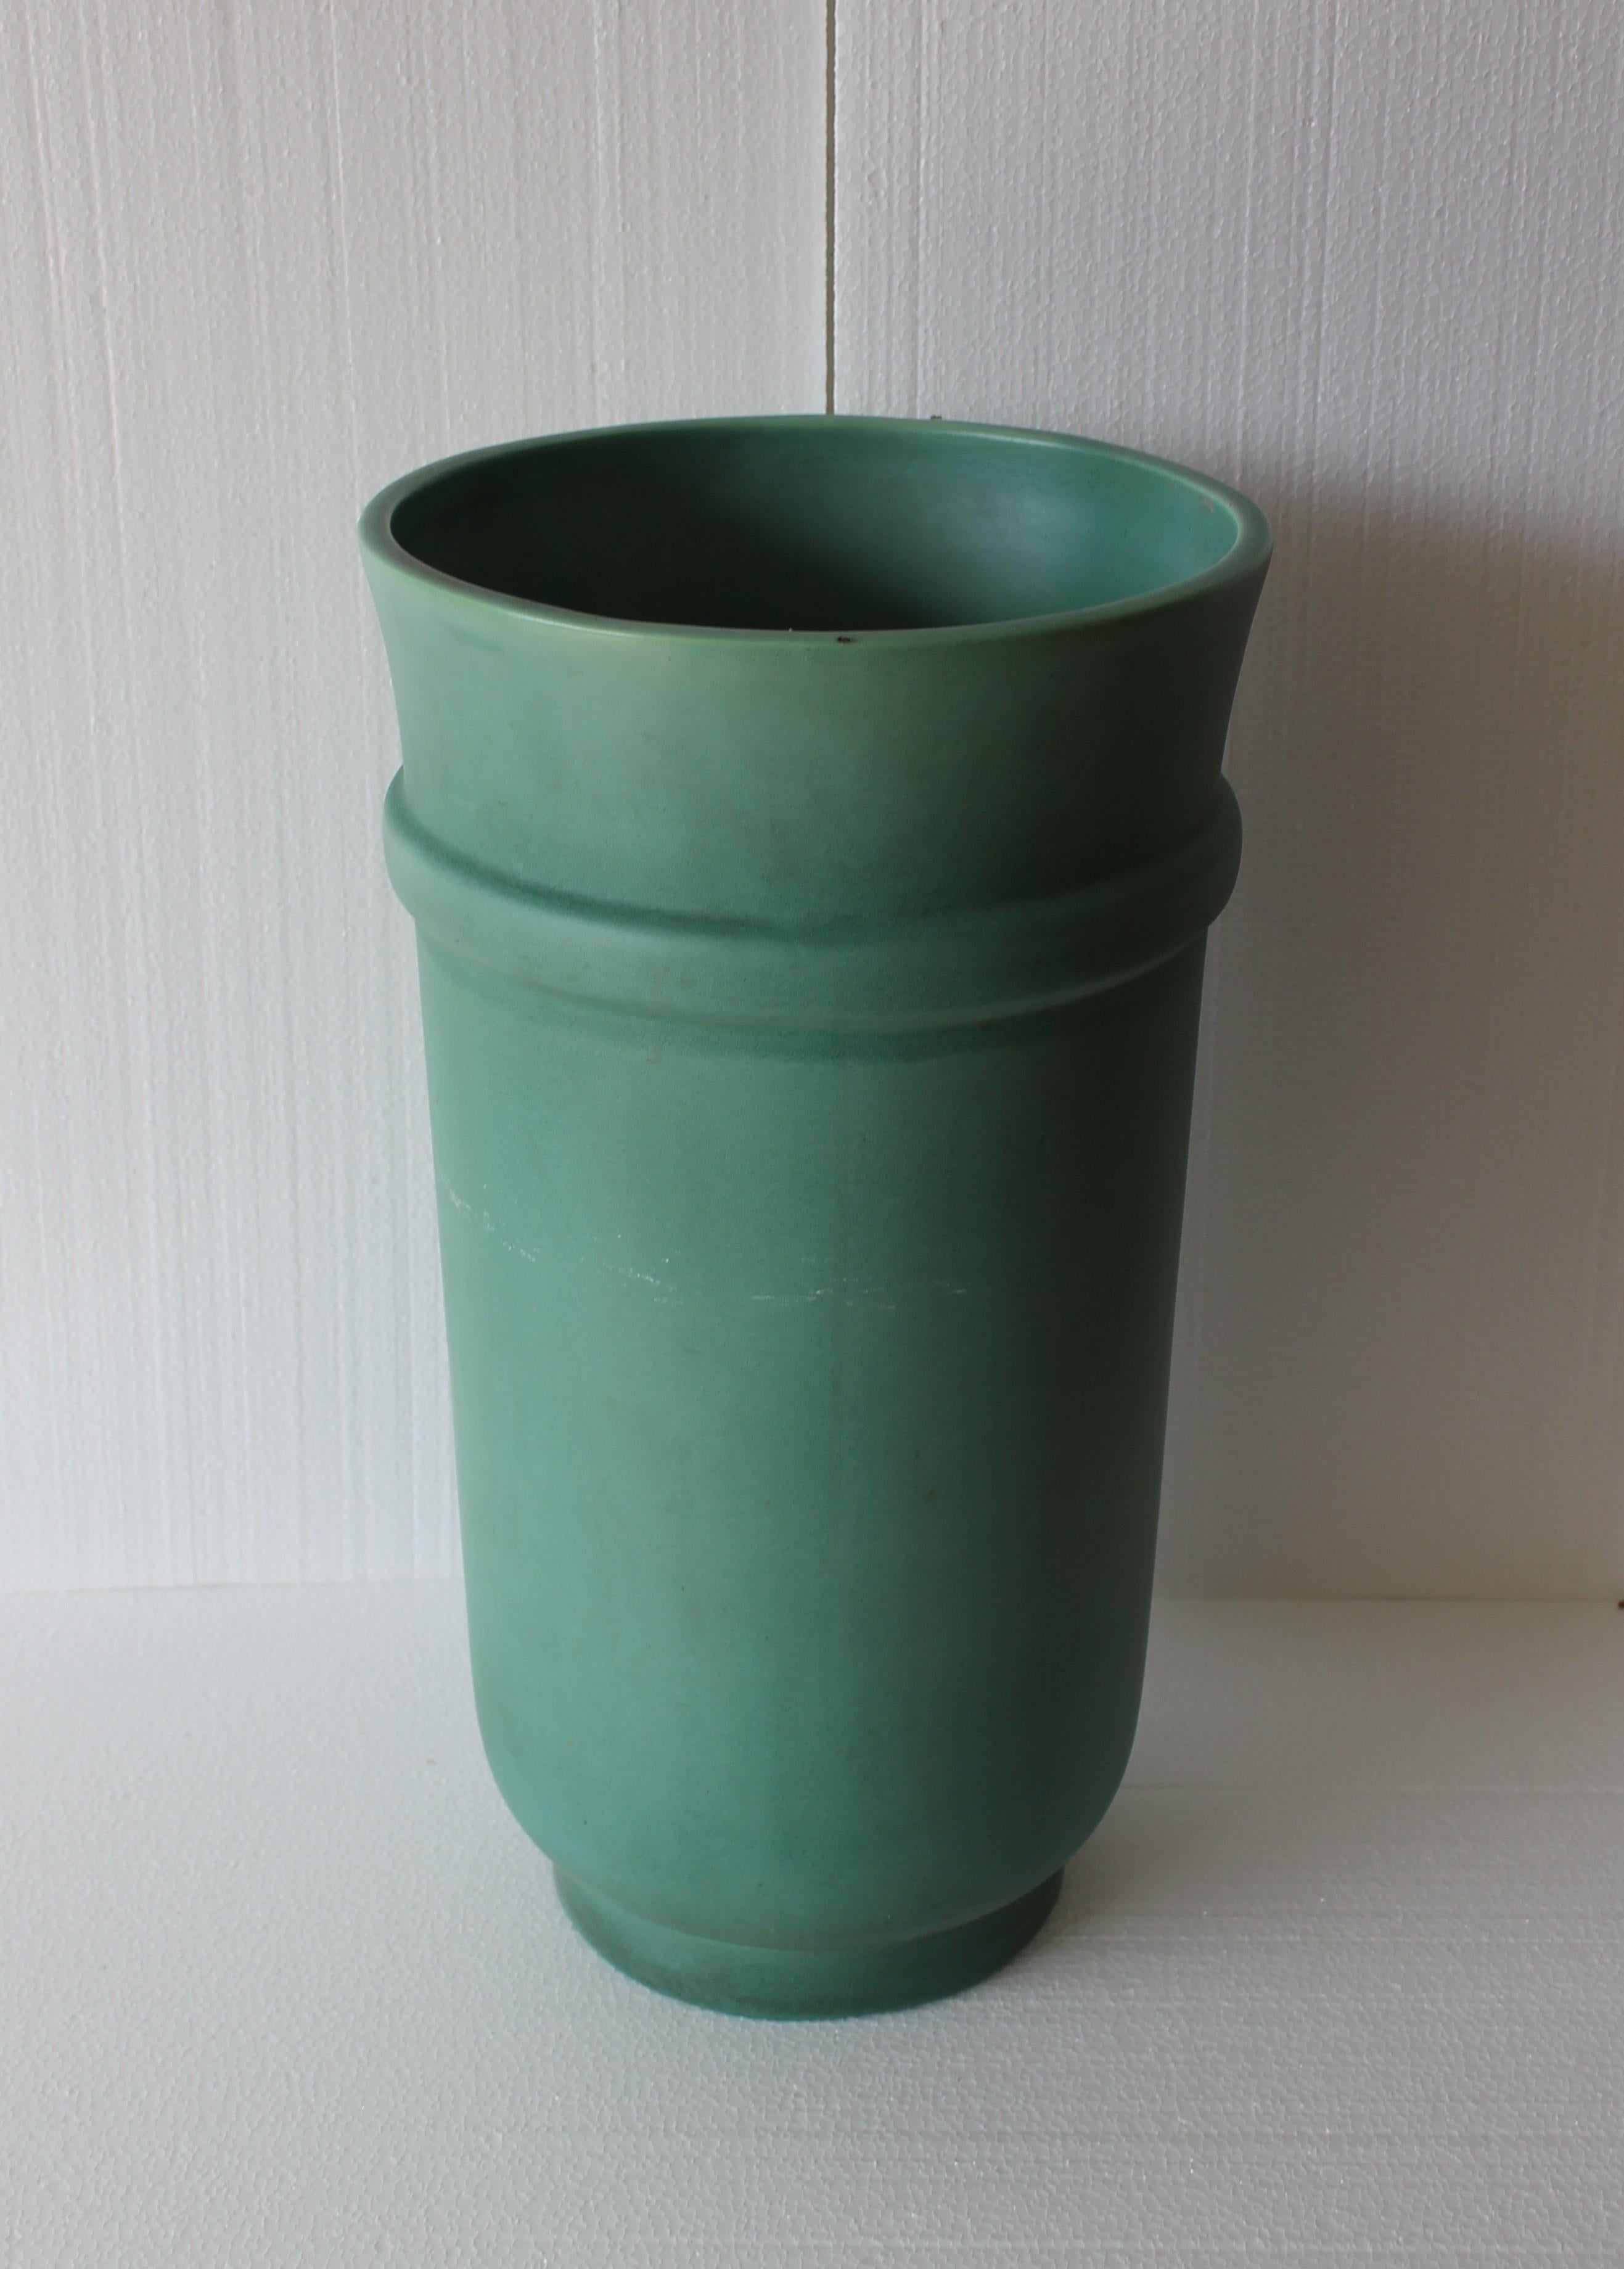 Tall Richard Ginori green ceramic vase by Giovanni Gariboldi, Italy, 1950s

Mark on the base: RICHARD GINORI to in Italia 688T